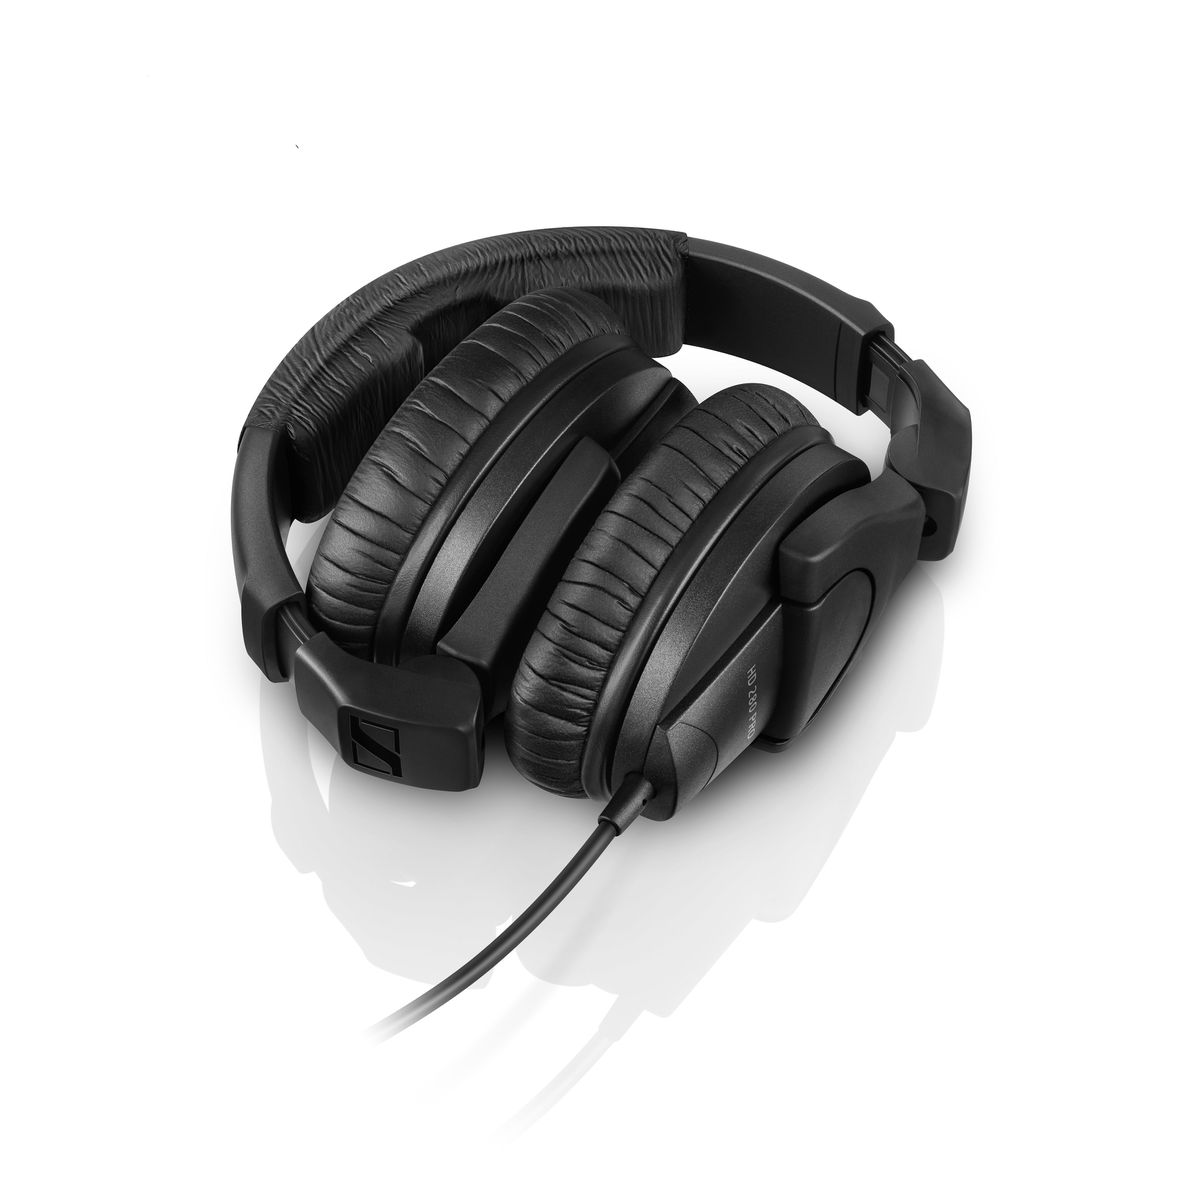 Sennheiser HD 280 PRO , Circumaral,Coiled Cable Headphones